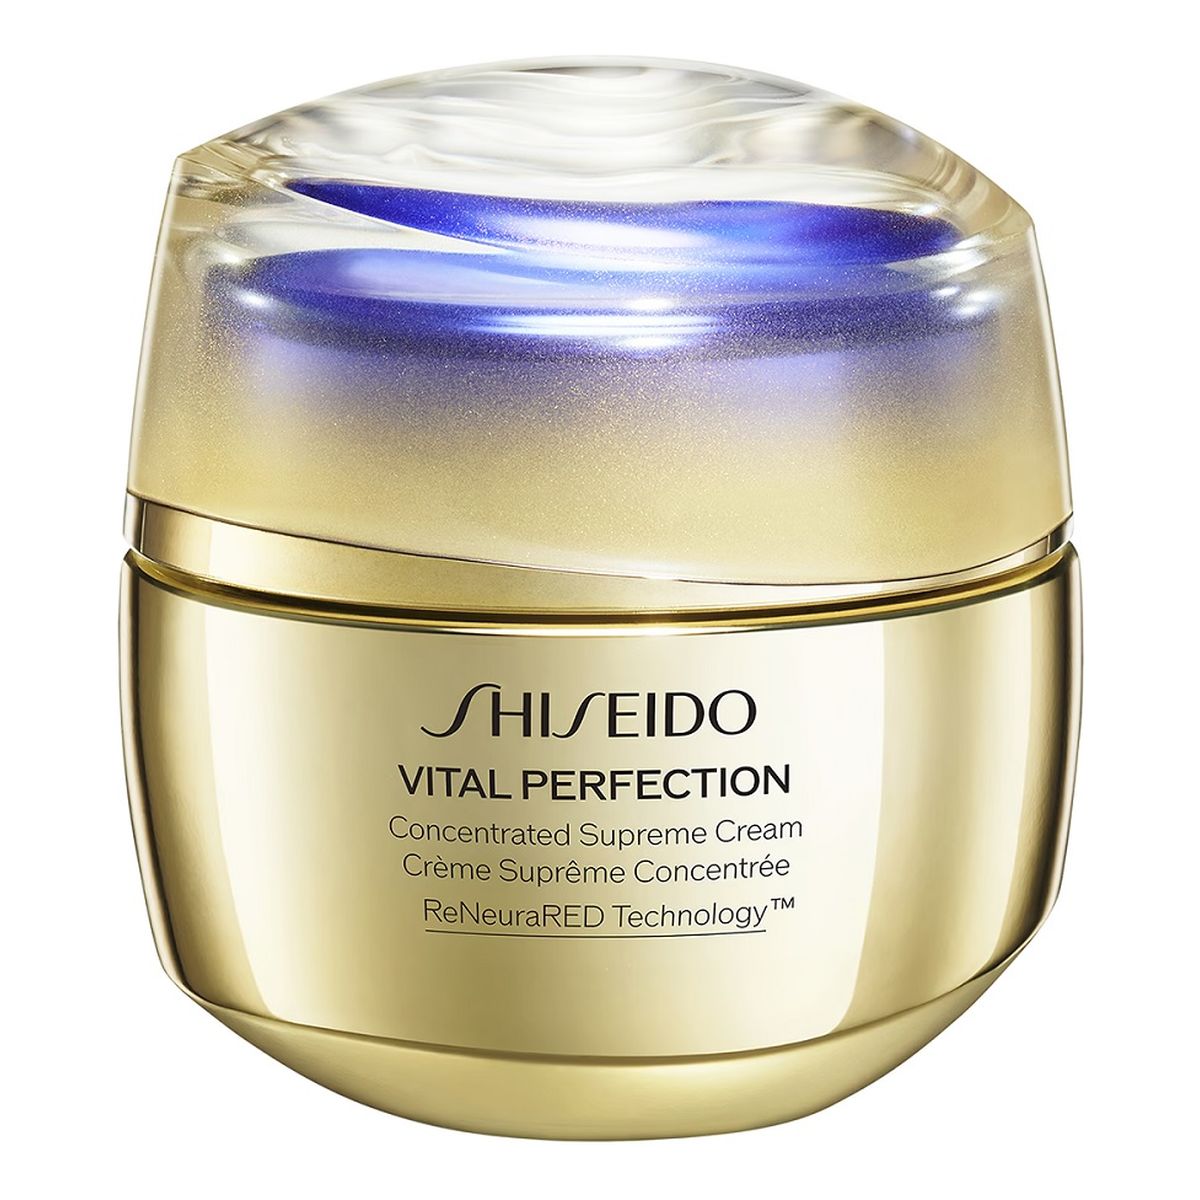 Shiseido Vital Perfection Concentrated Supreme Cream skoncentrowany Krem do twarzy 50ml